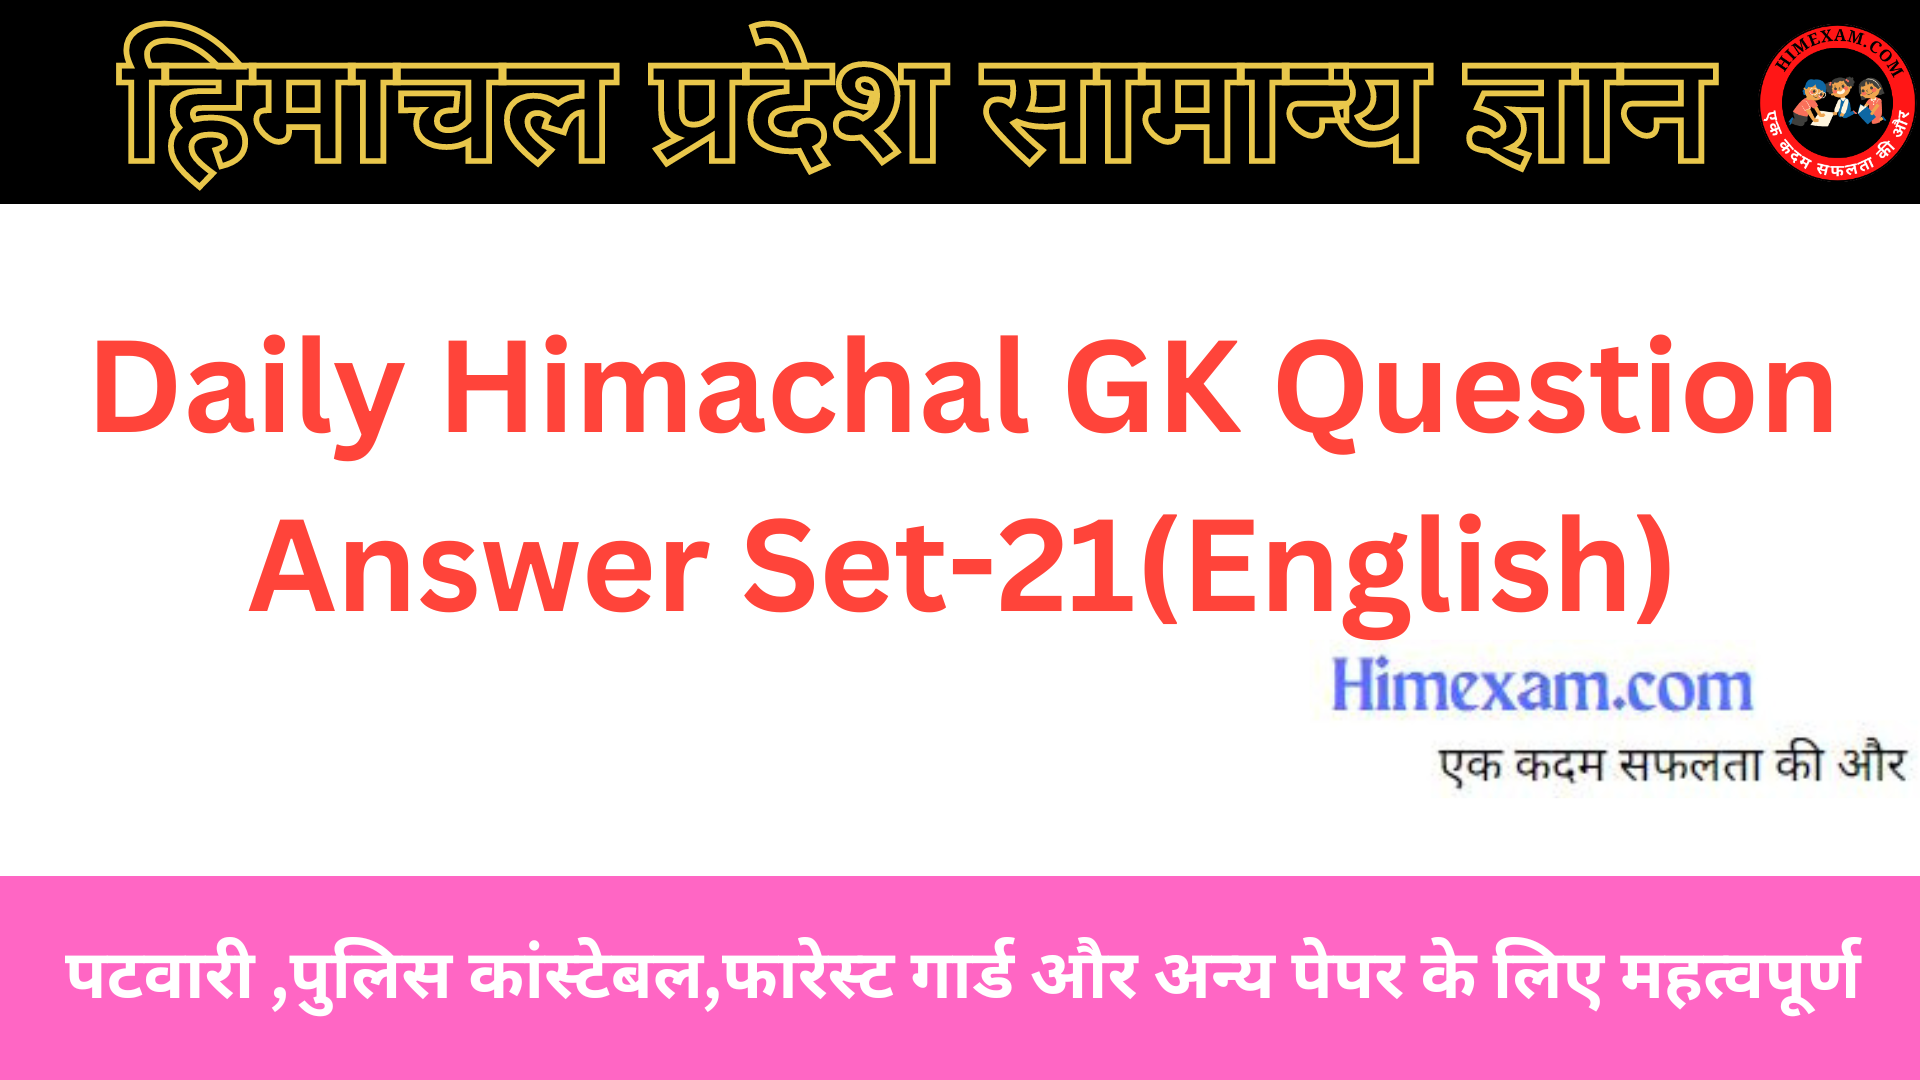 Daily HP GK Online Quiz Set-21 (English)